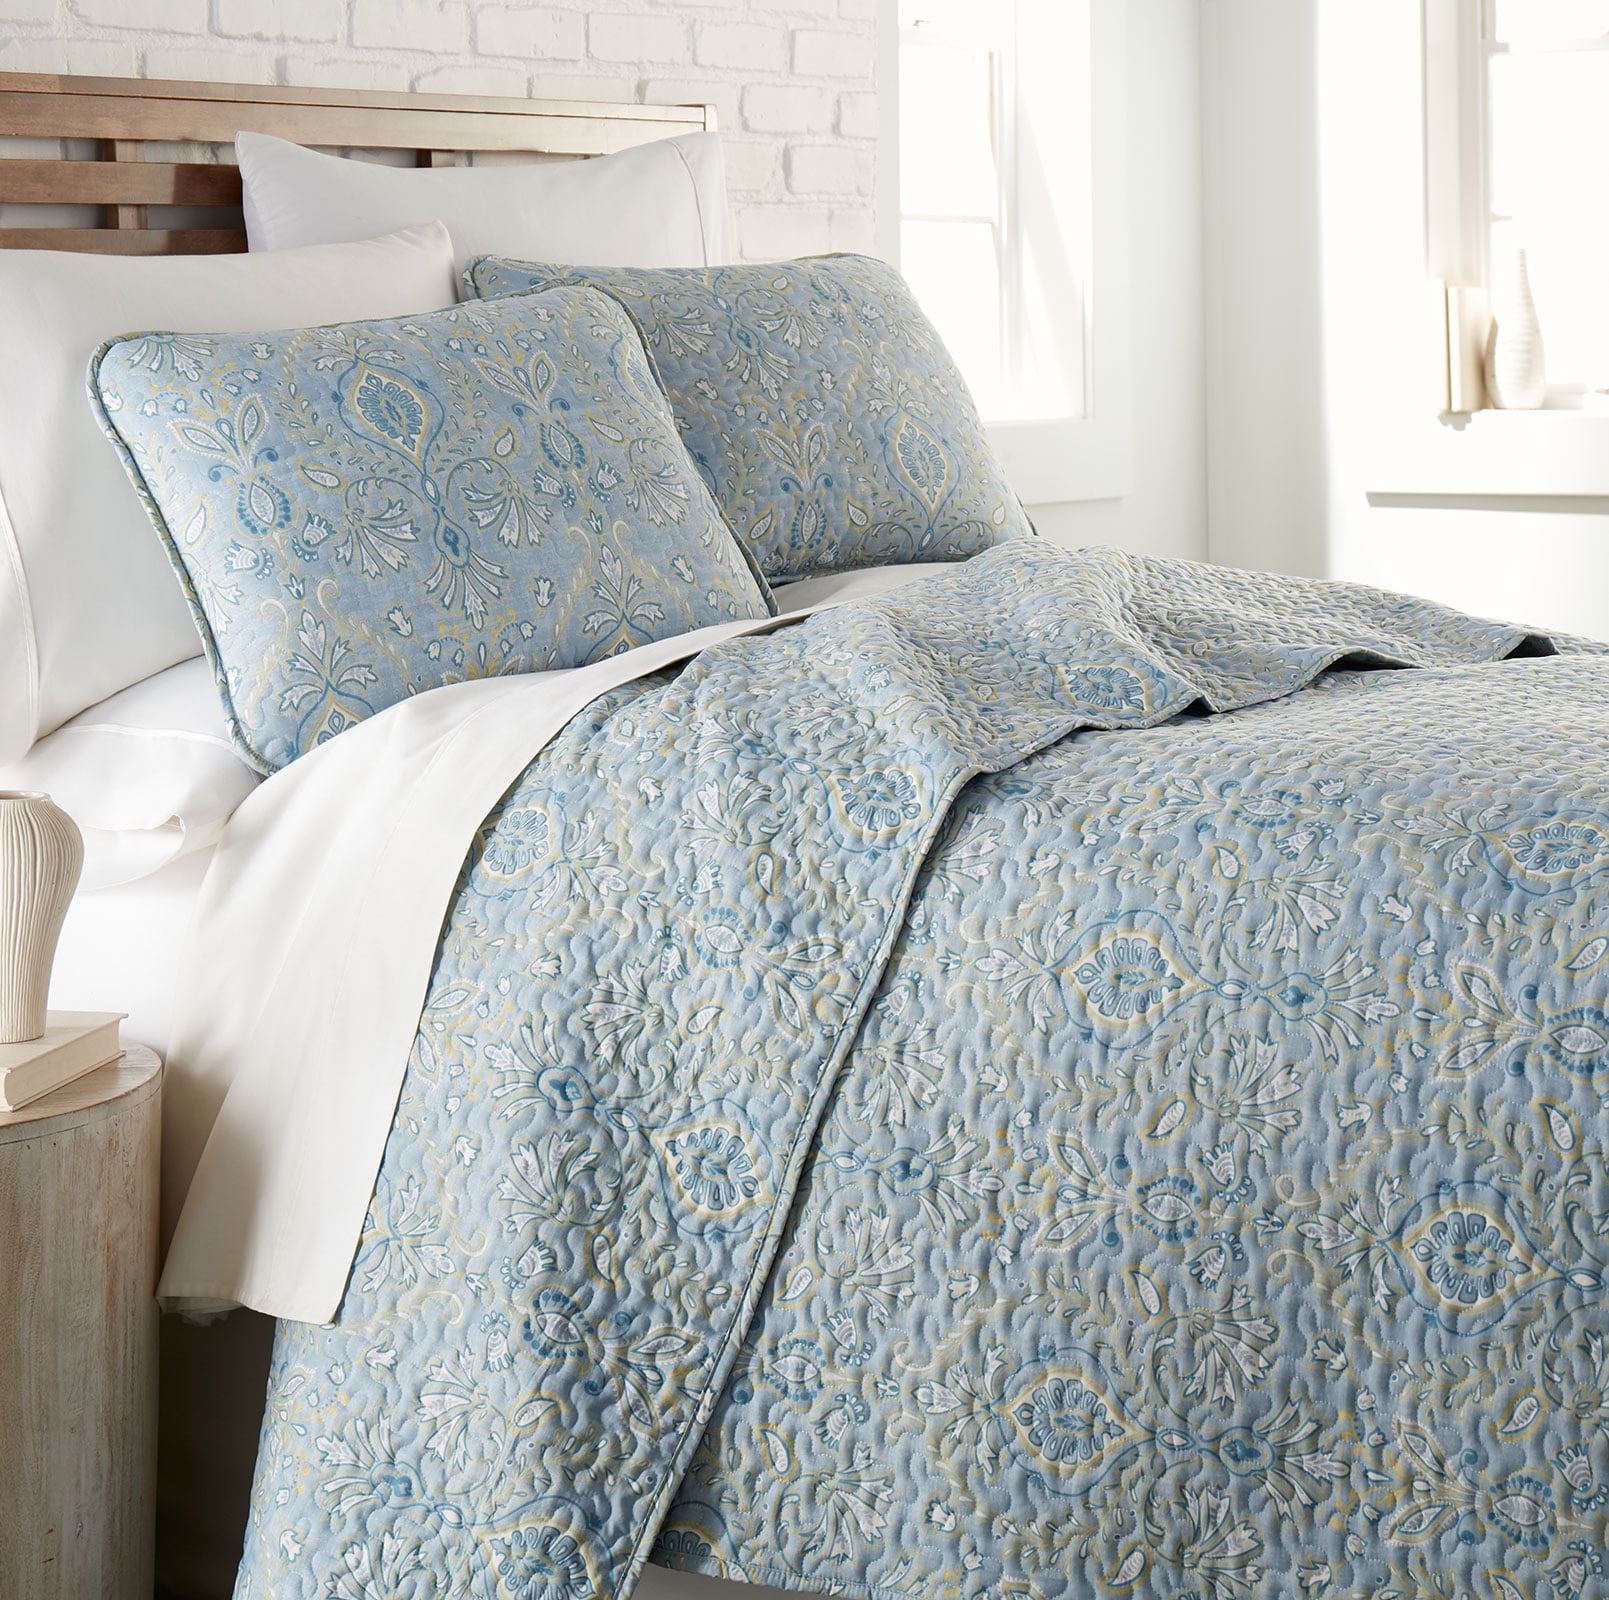 Details about   3 Pc Watercolor 100% Cotton Quilt Set Quilted Bedspread Coverlet Shams Multi 